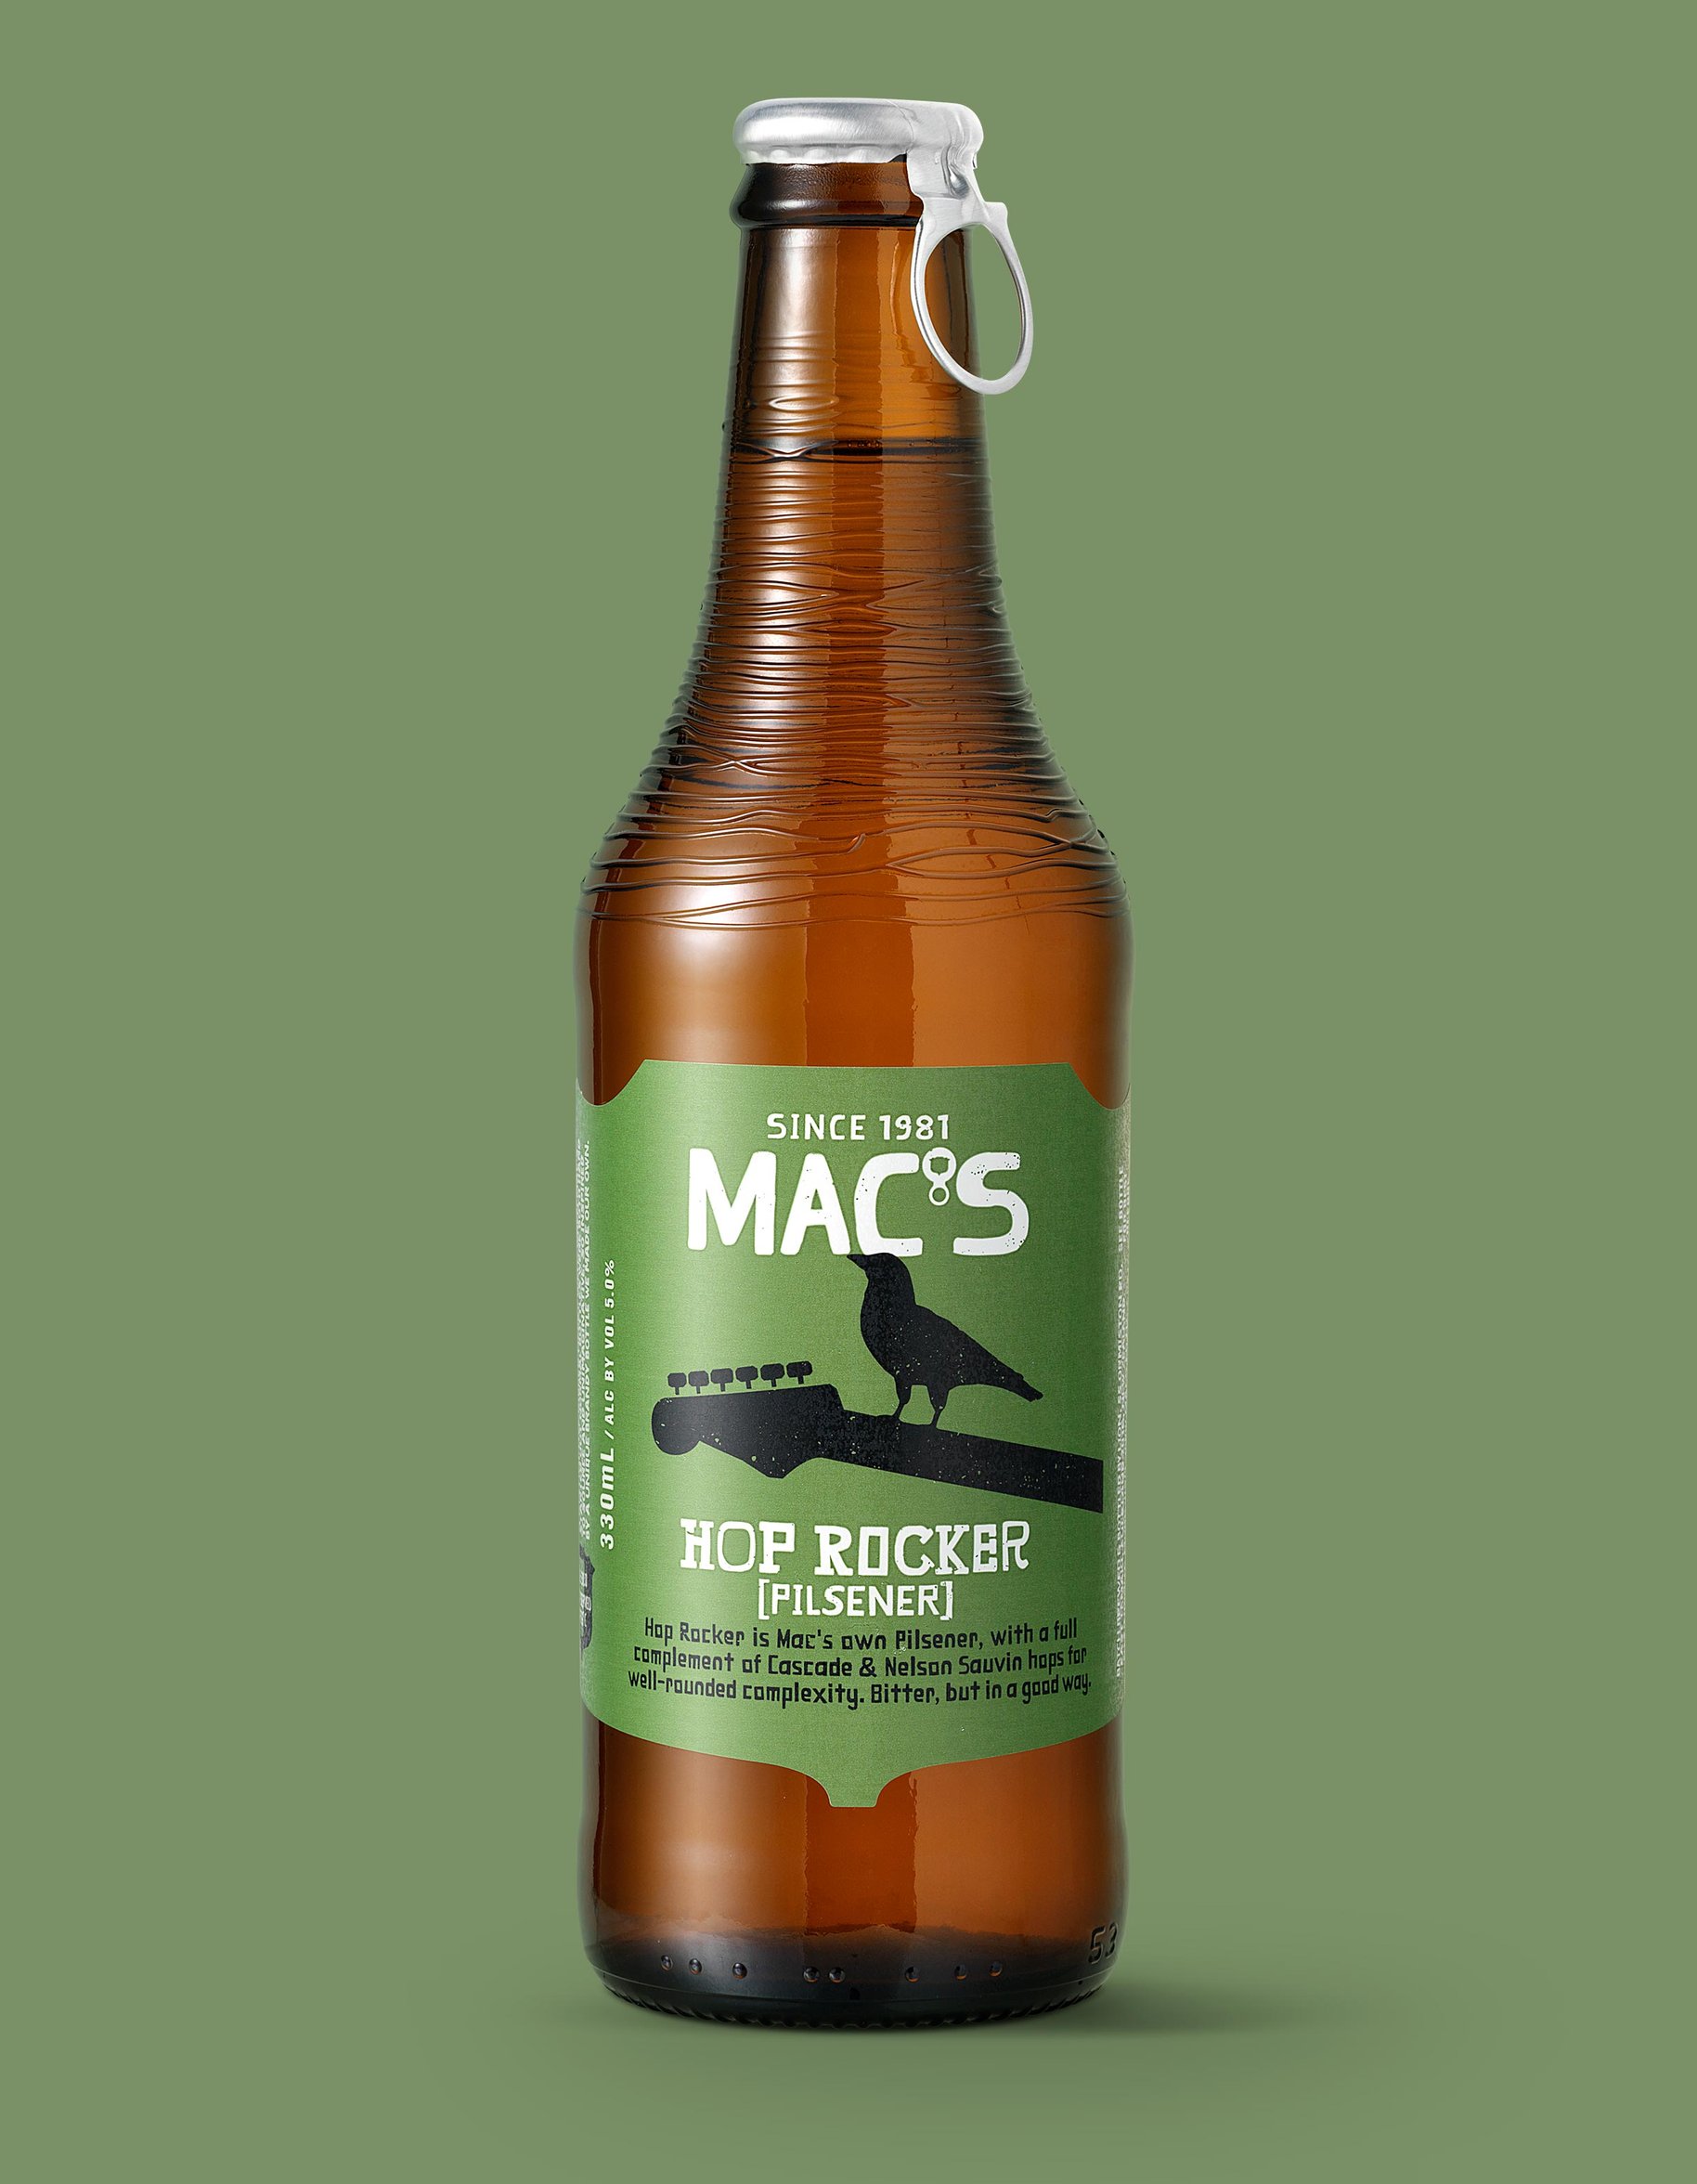 Macs Beer hop rocker pilsener packaging